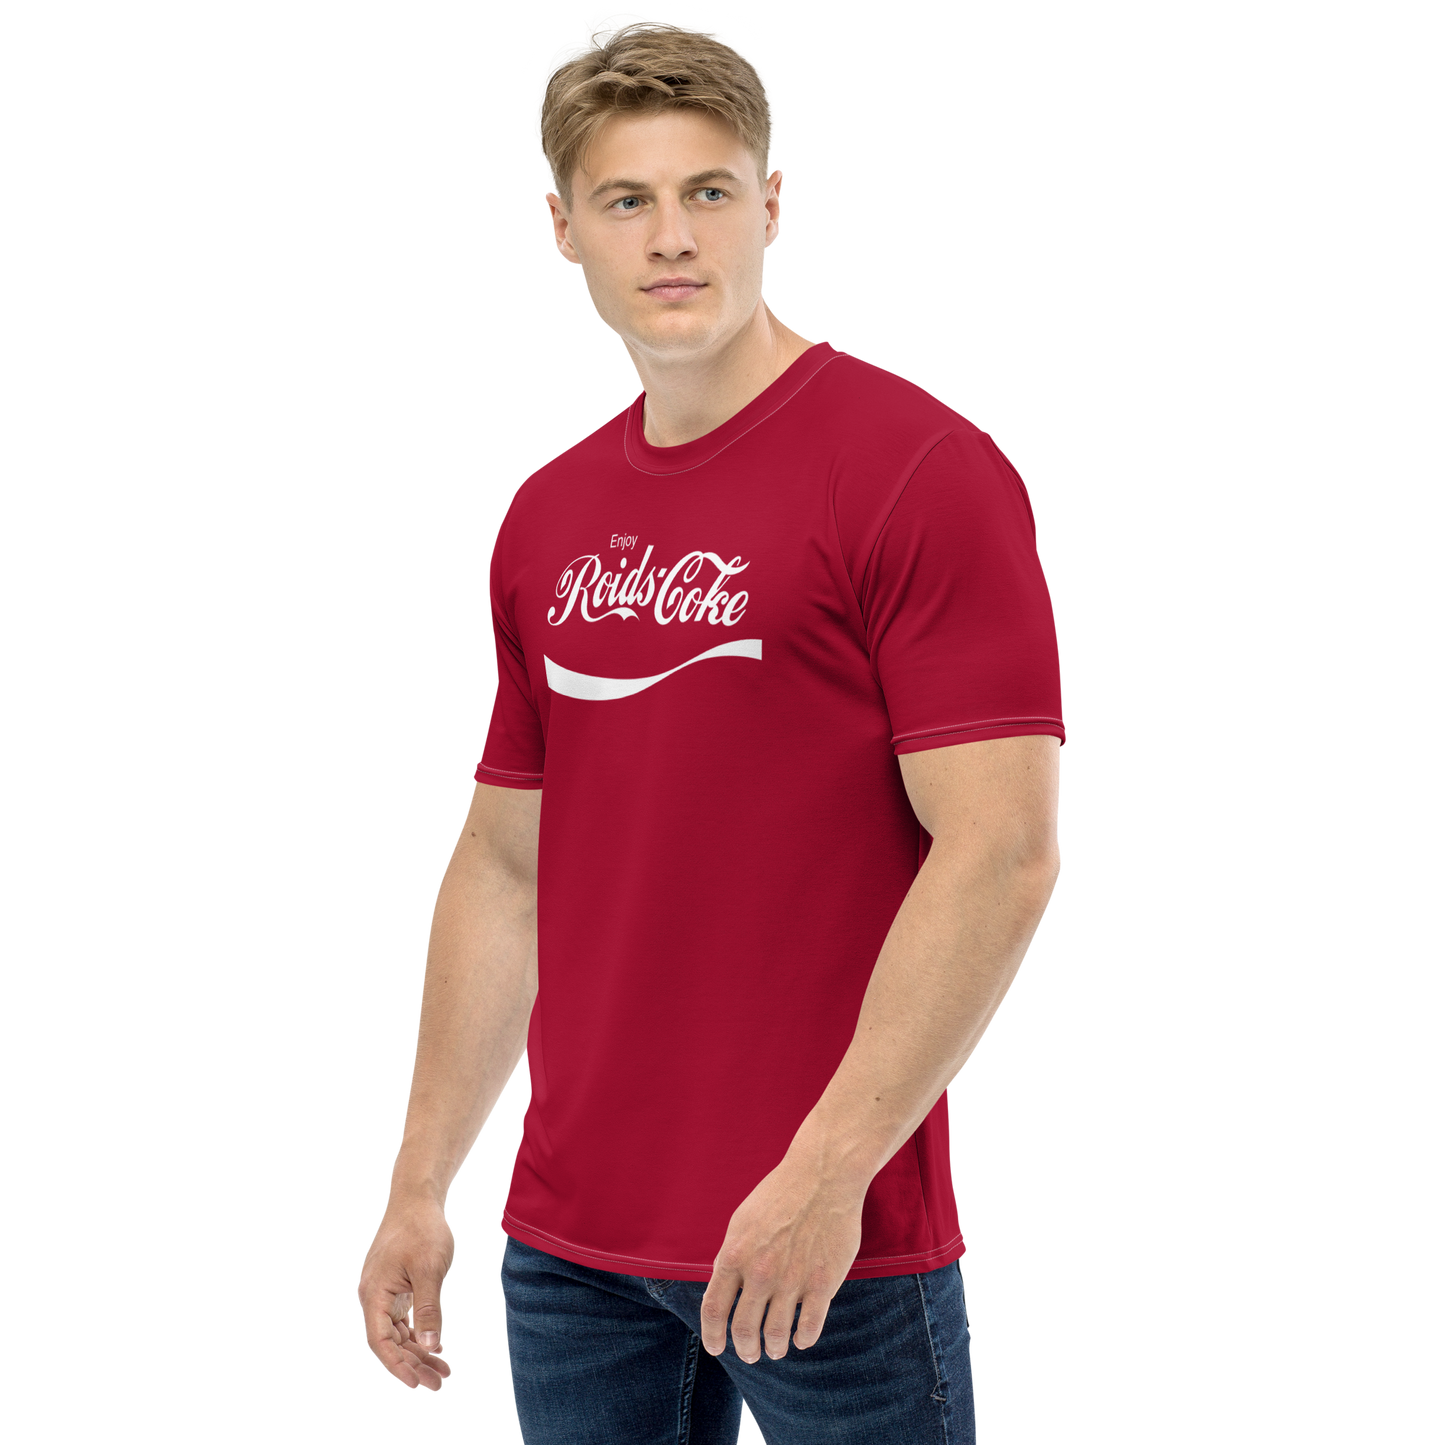 Enjoy Roids & Coke Men's Athletic T-Shirt